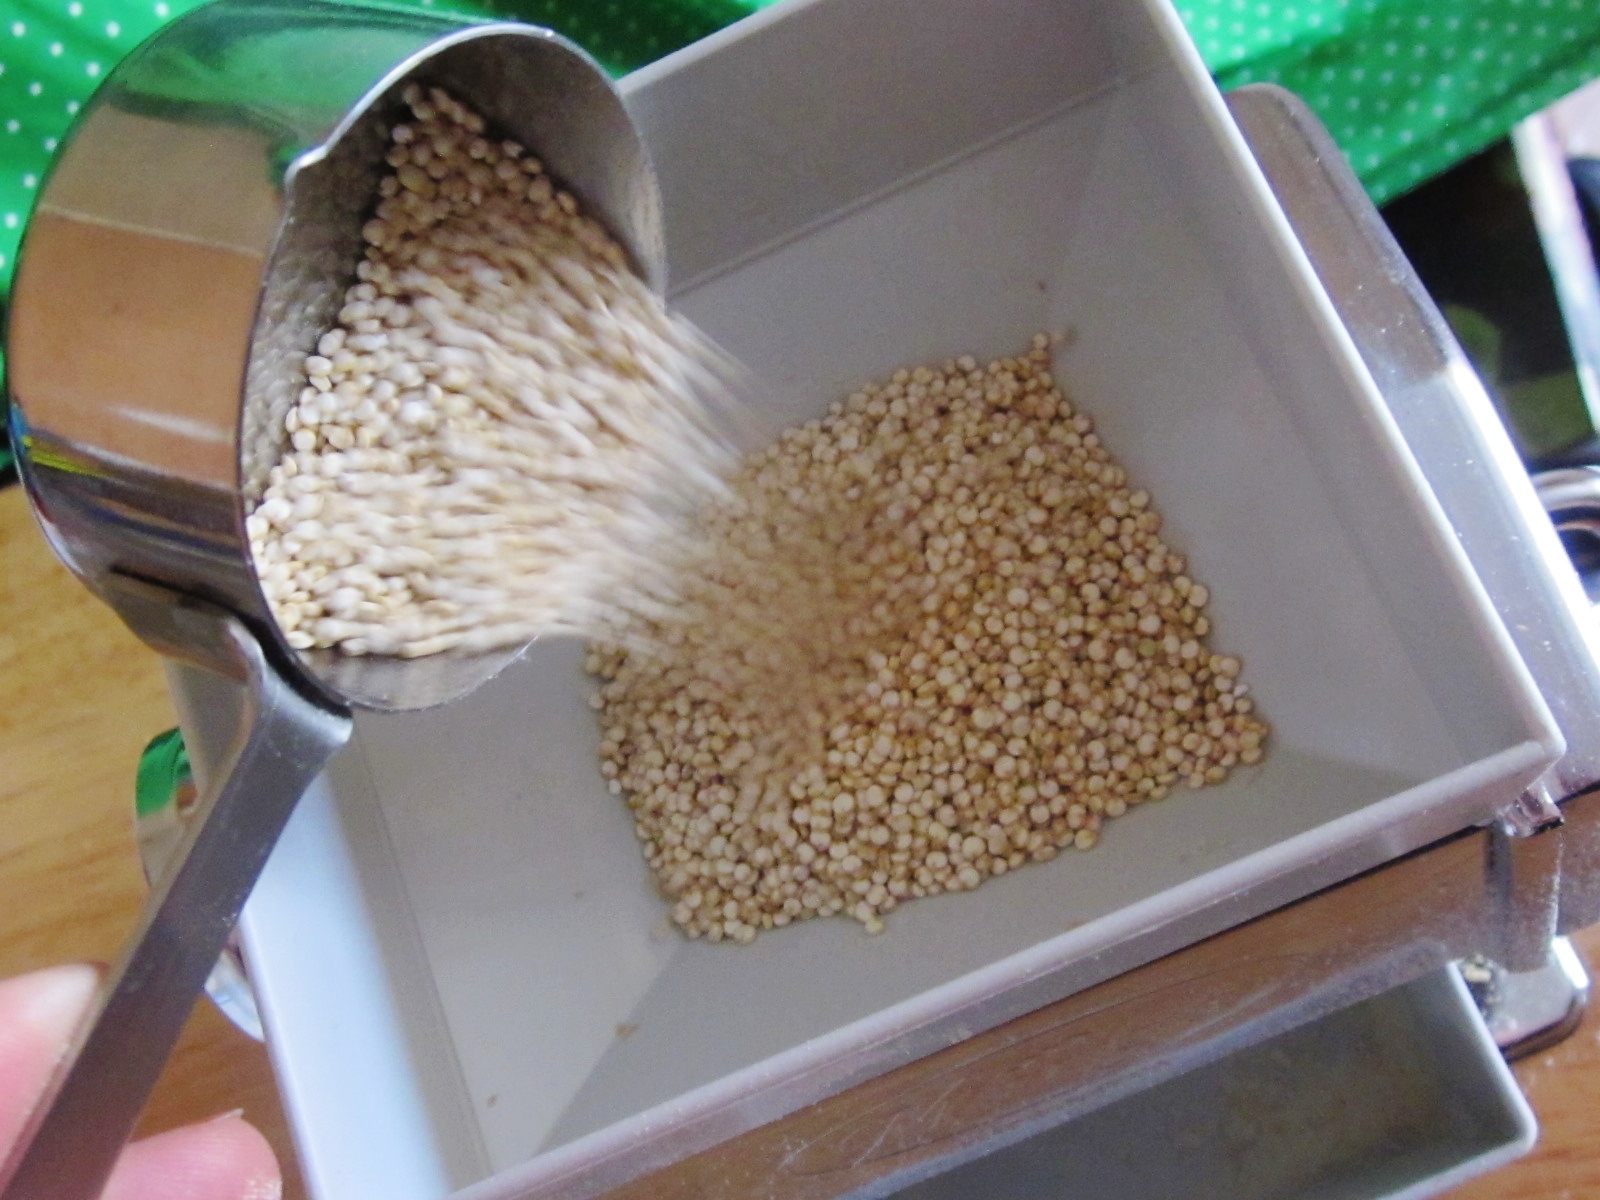 How do you make an oatmeal poultice?